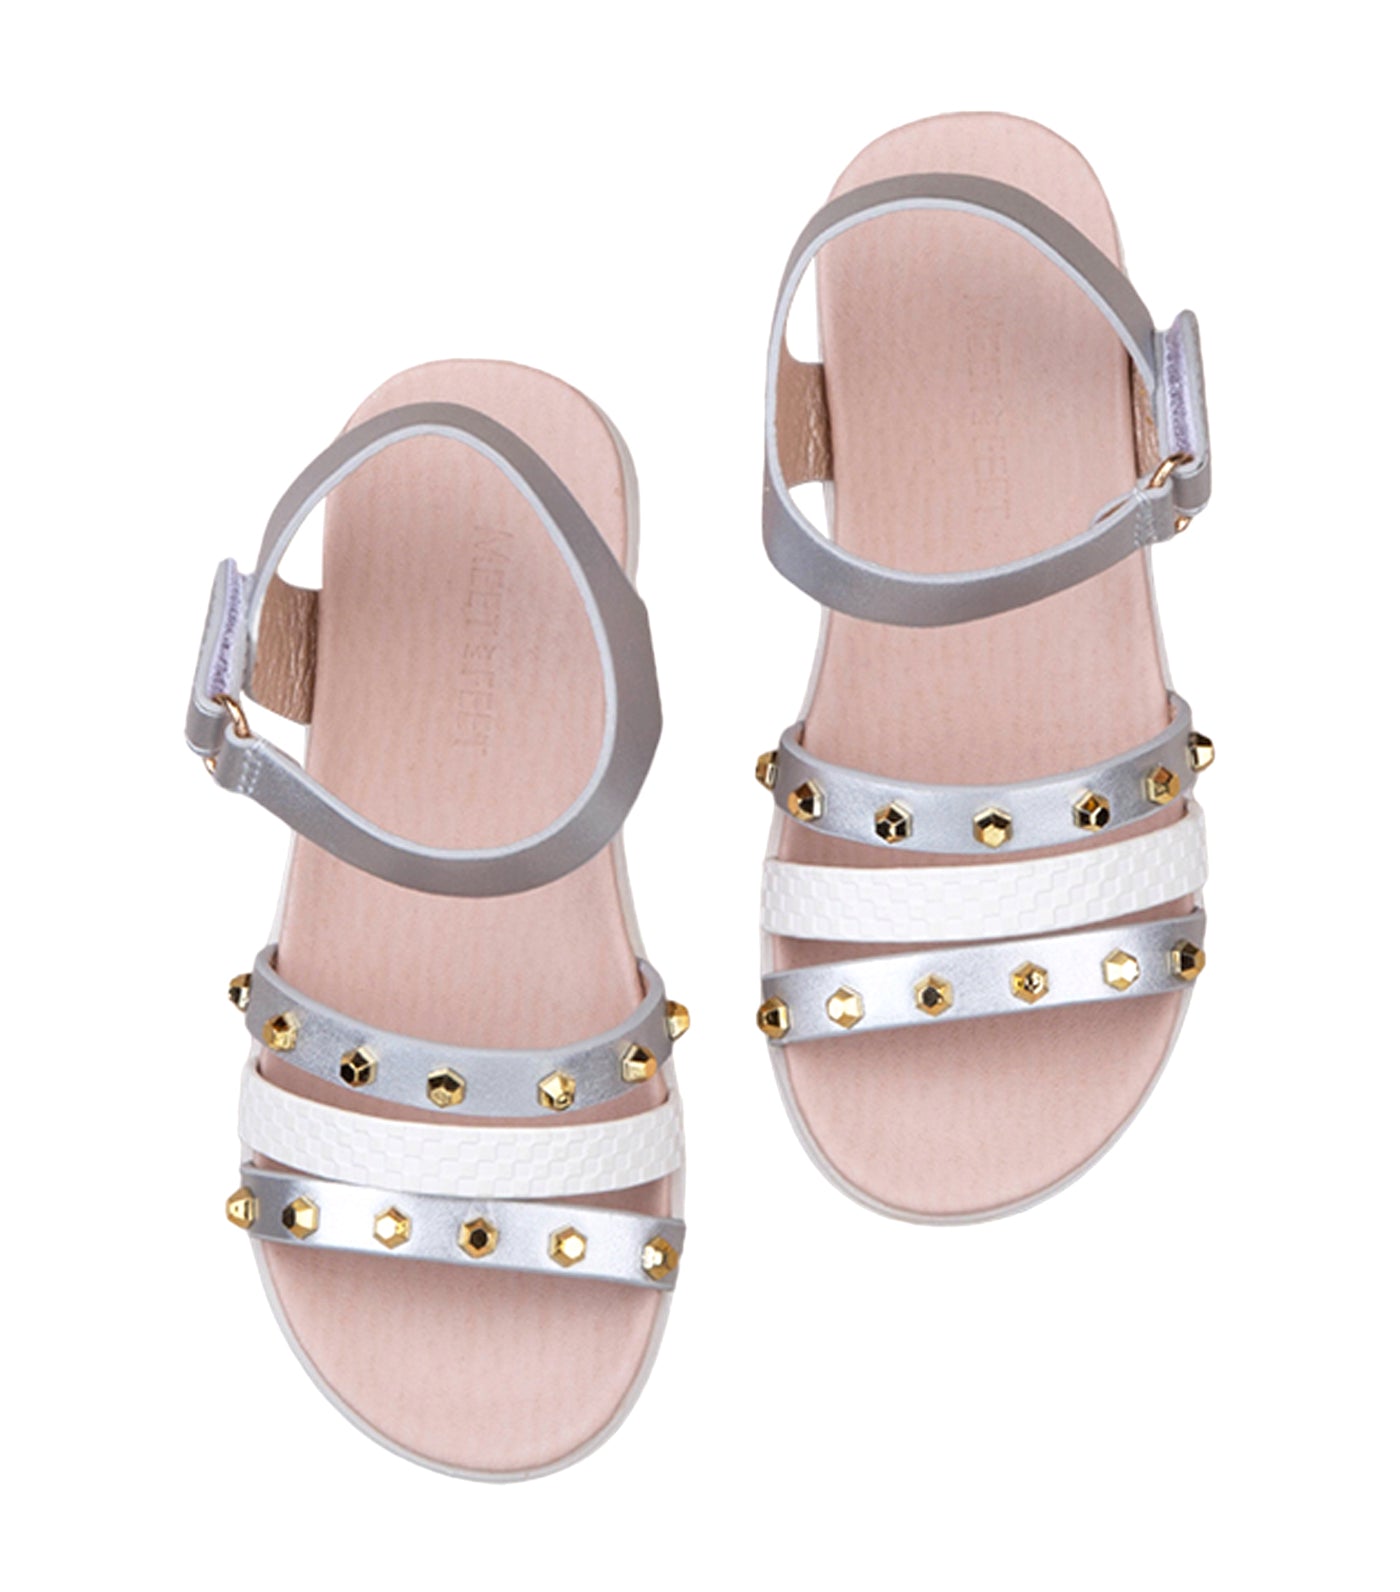 Betts Kids Sandals for Girls - Silver